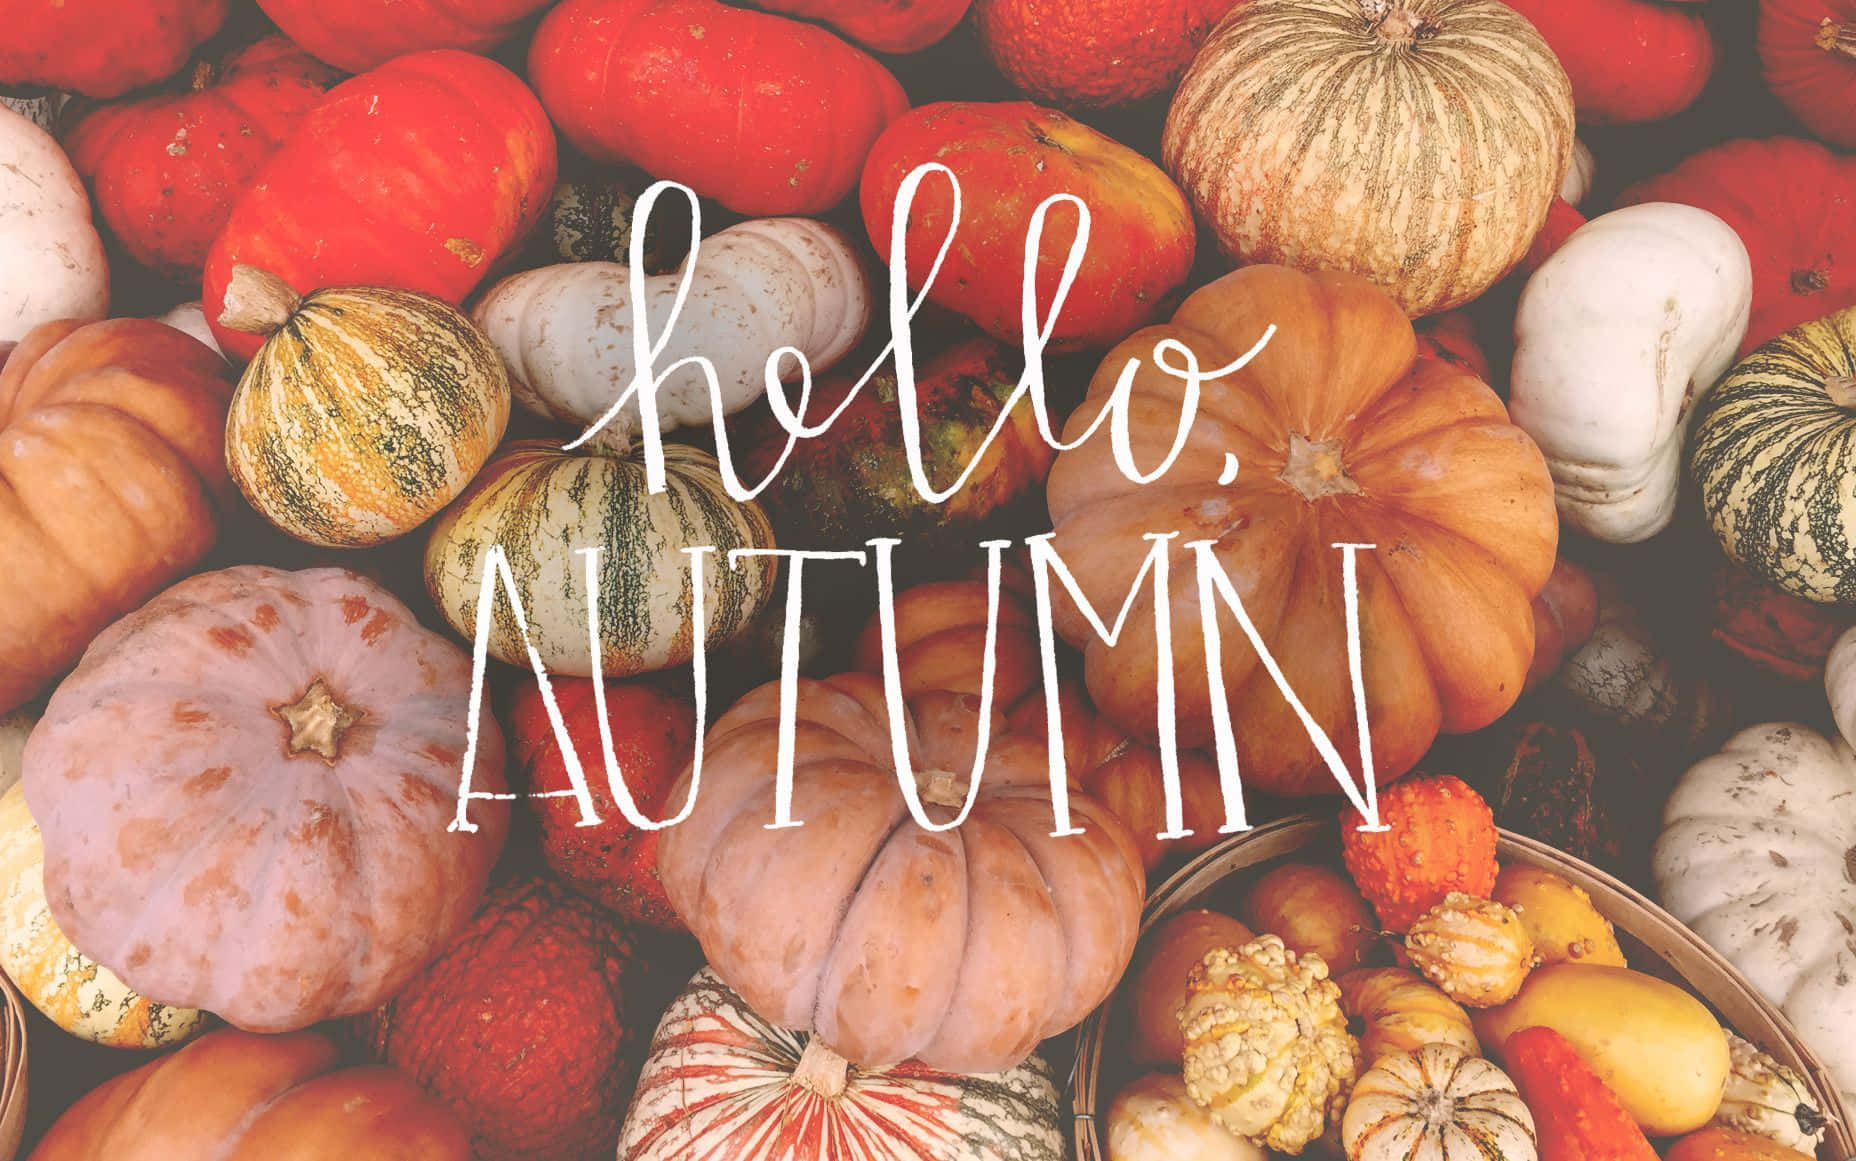 autumn tumblr backgrounds